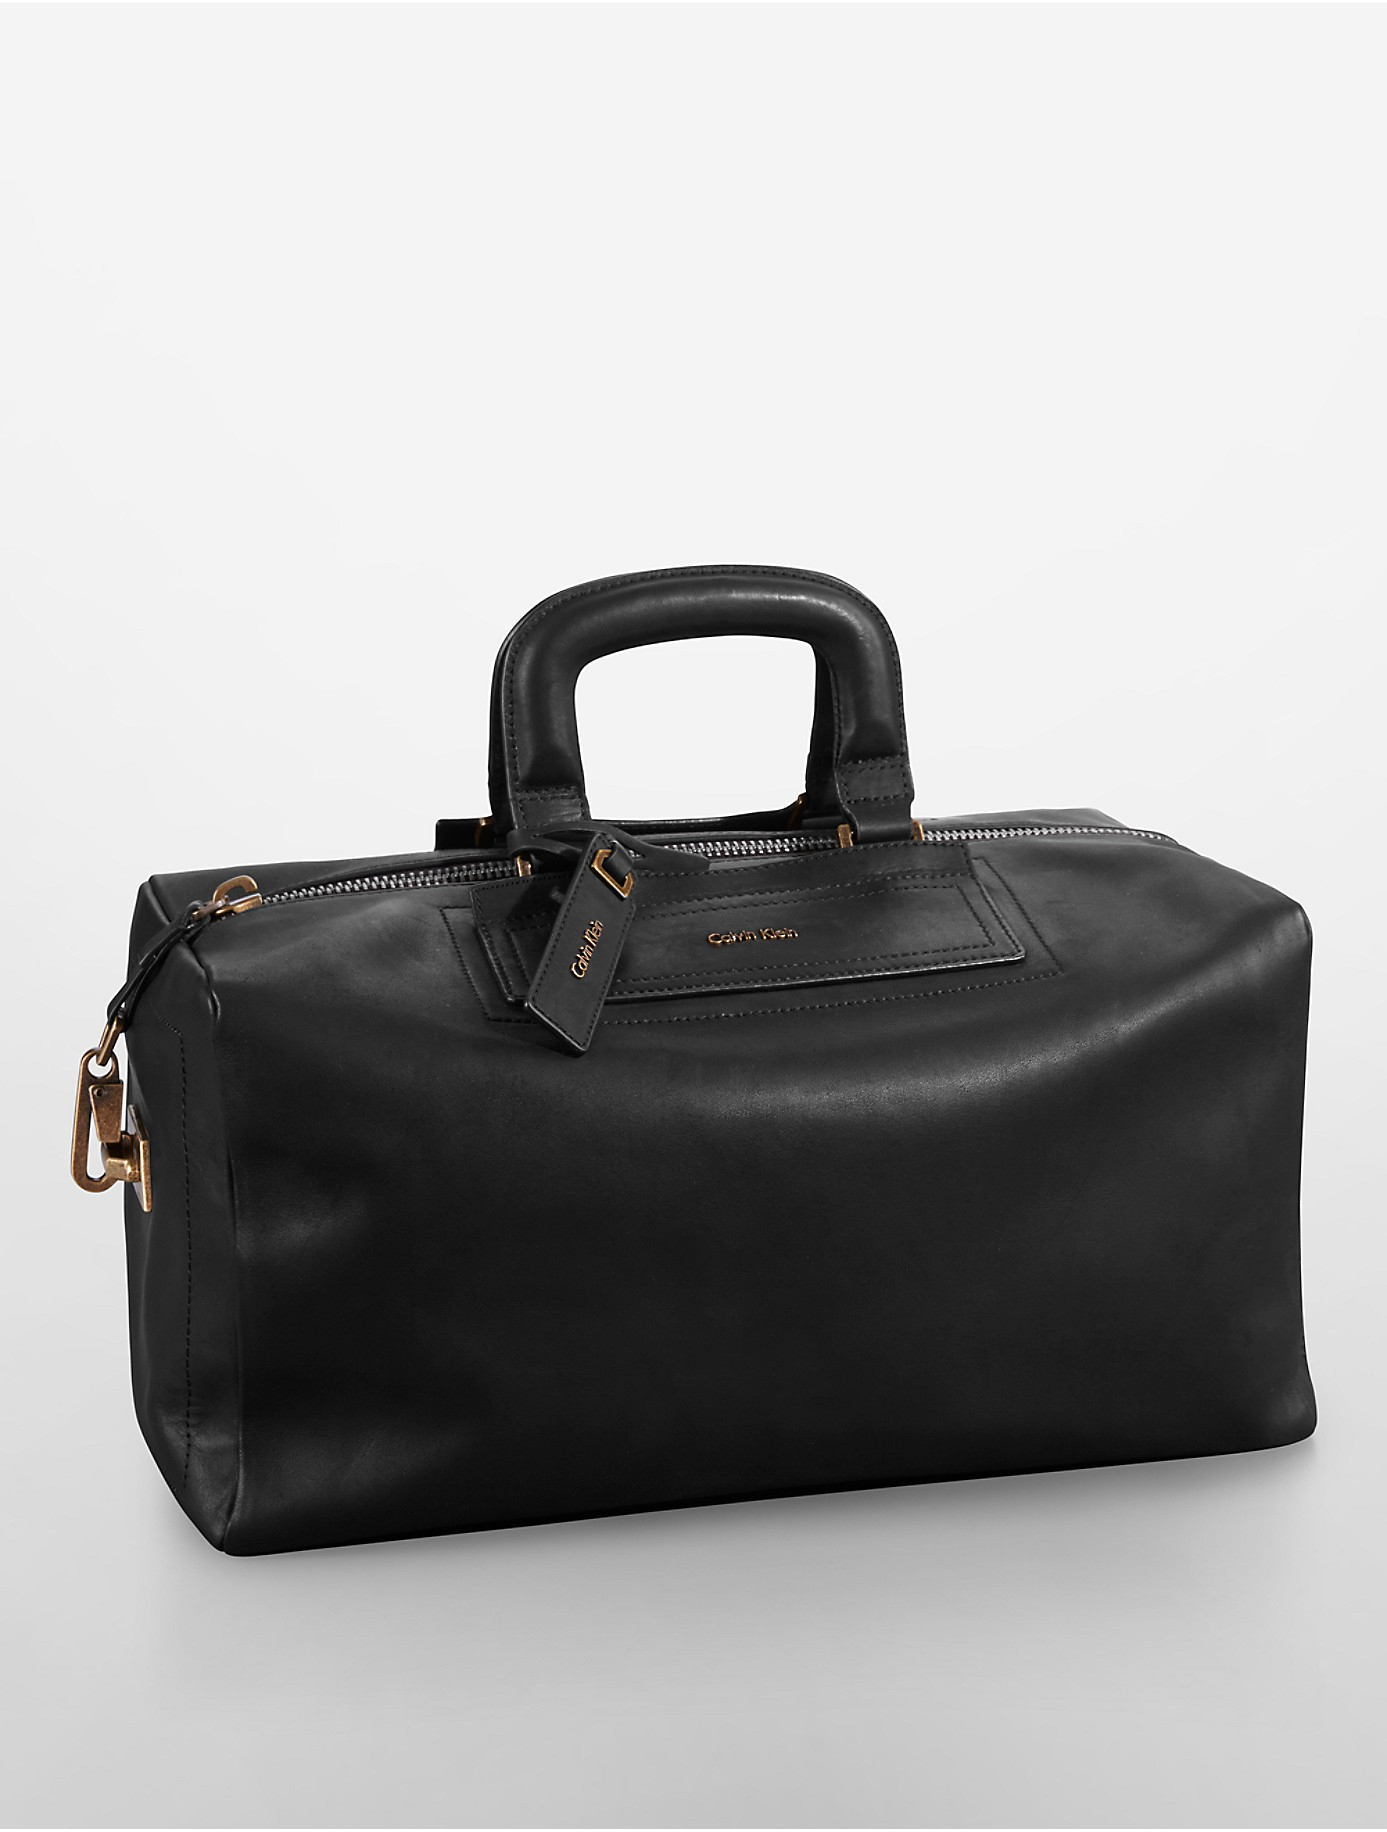 ck leather travel bag